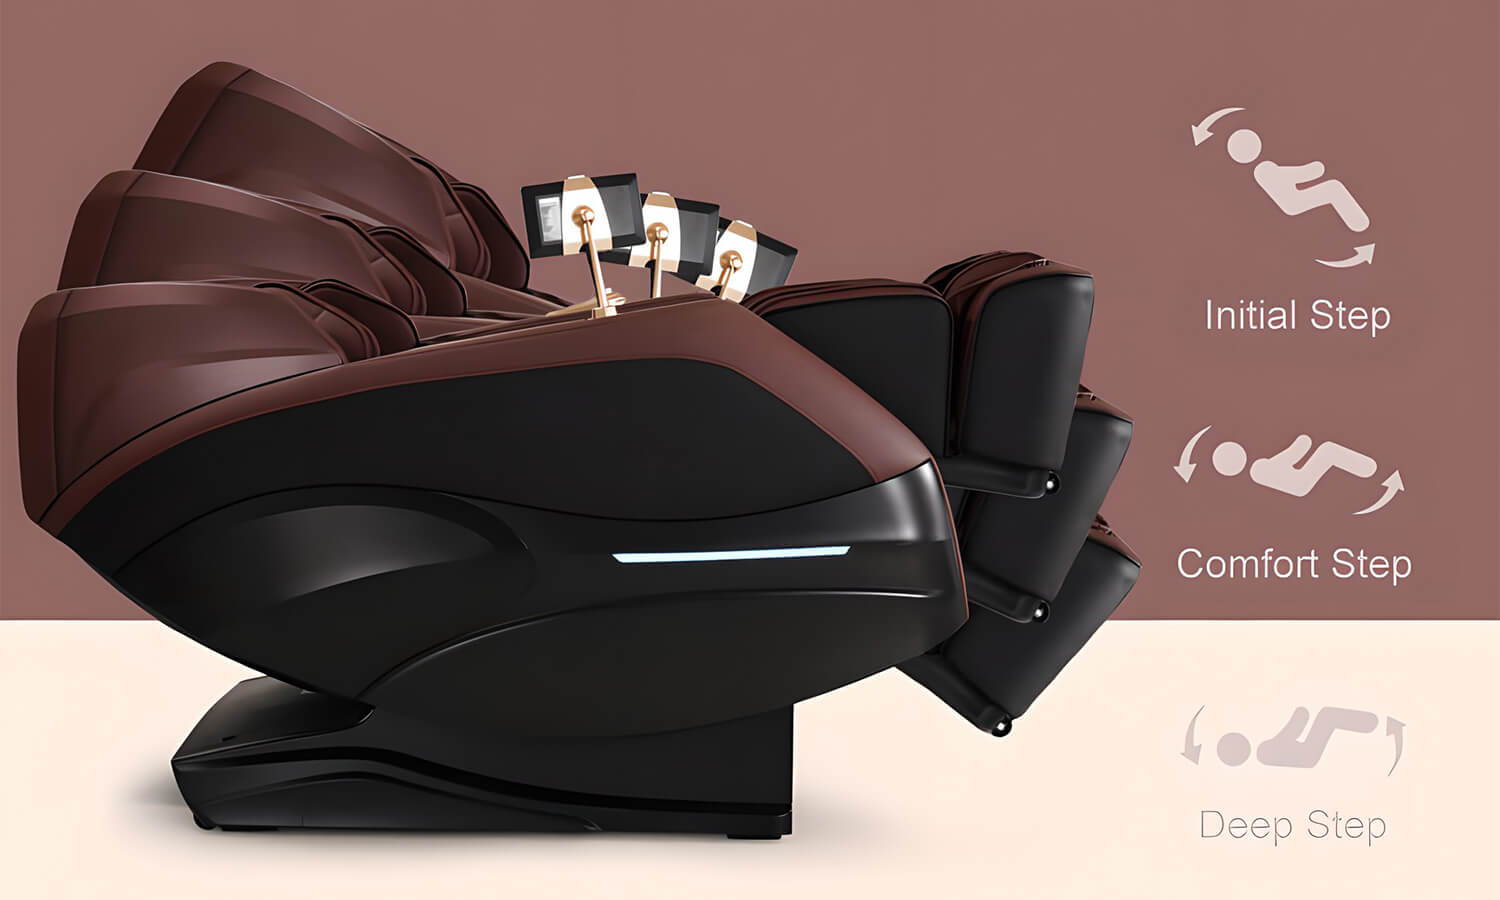 Asjmreye Massage Chair 4D Zero Gravity,Full Body Massage Chair With Heating, Voice Control, Smart Scan Body